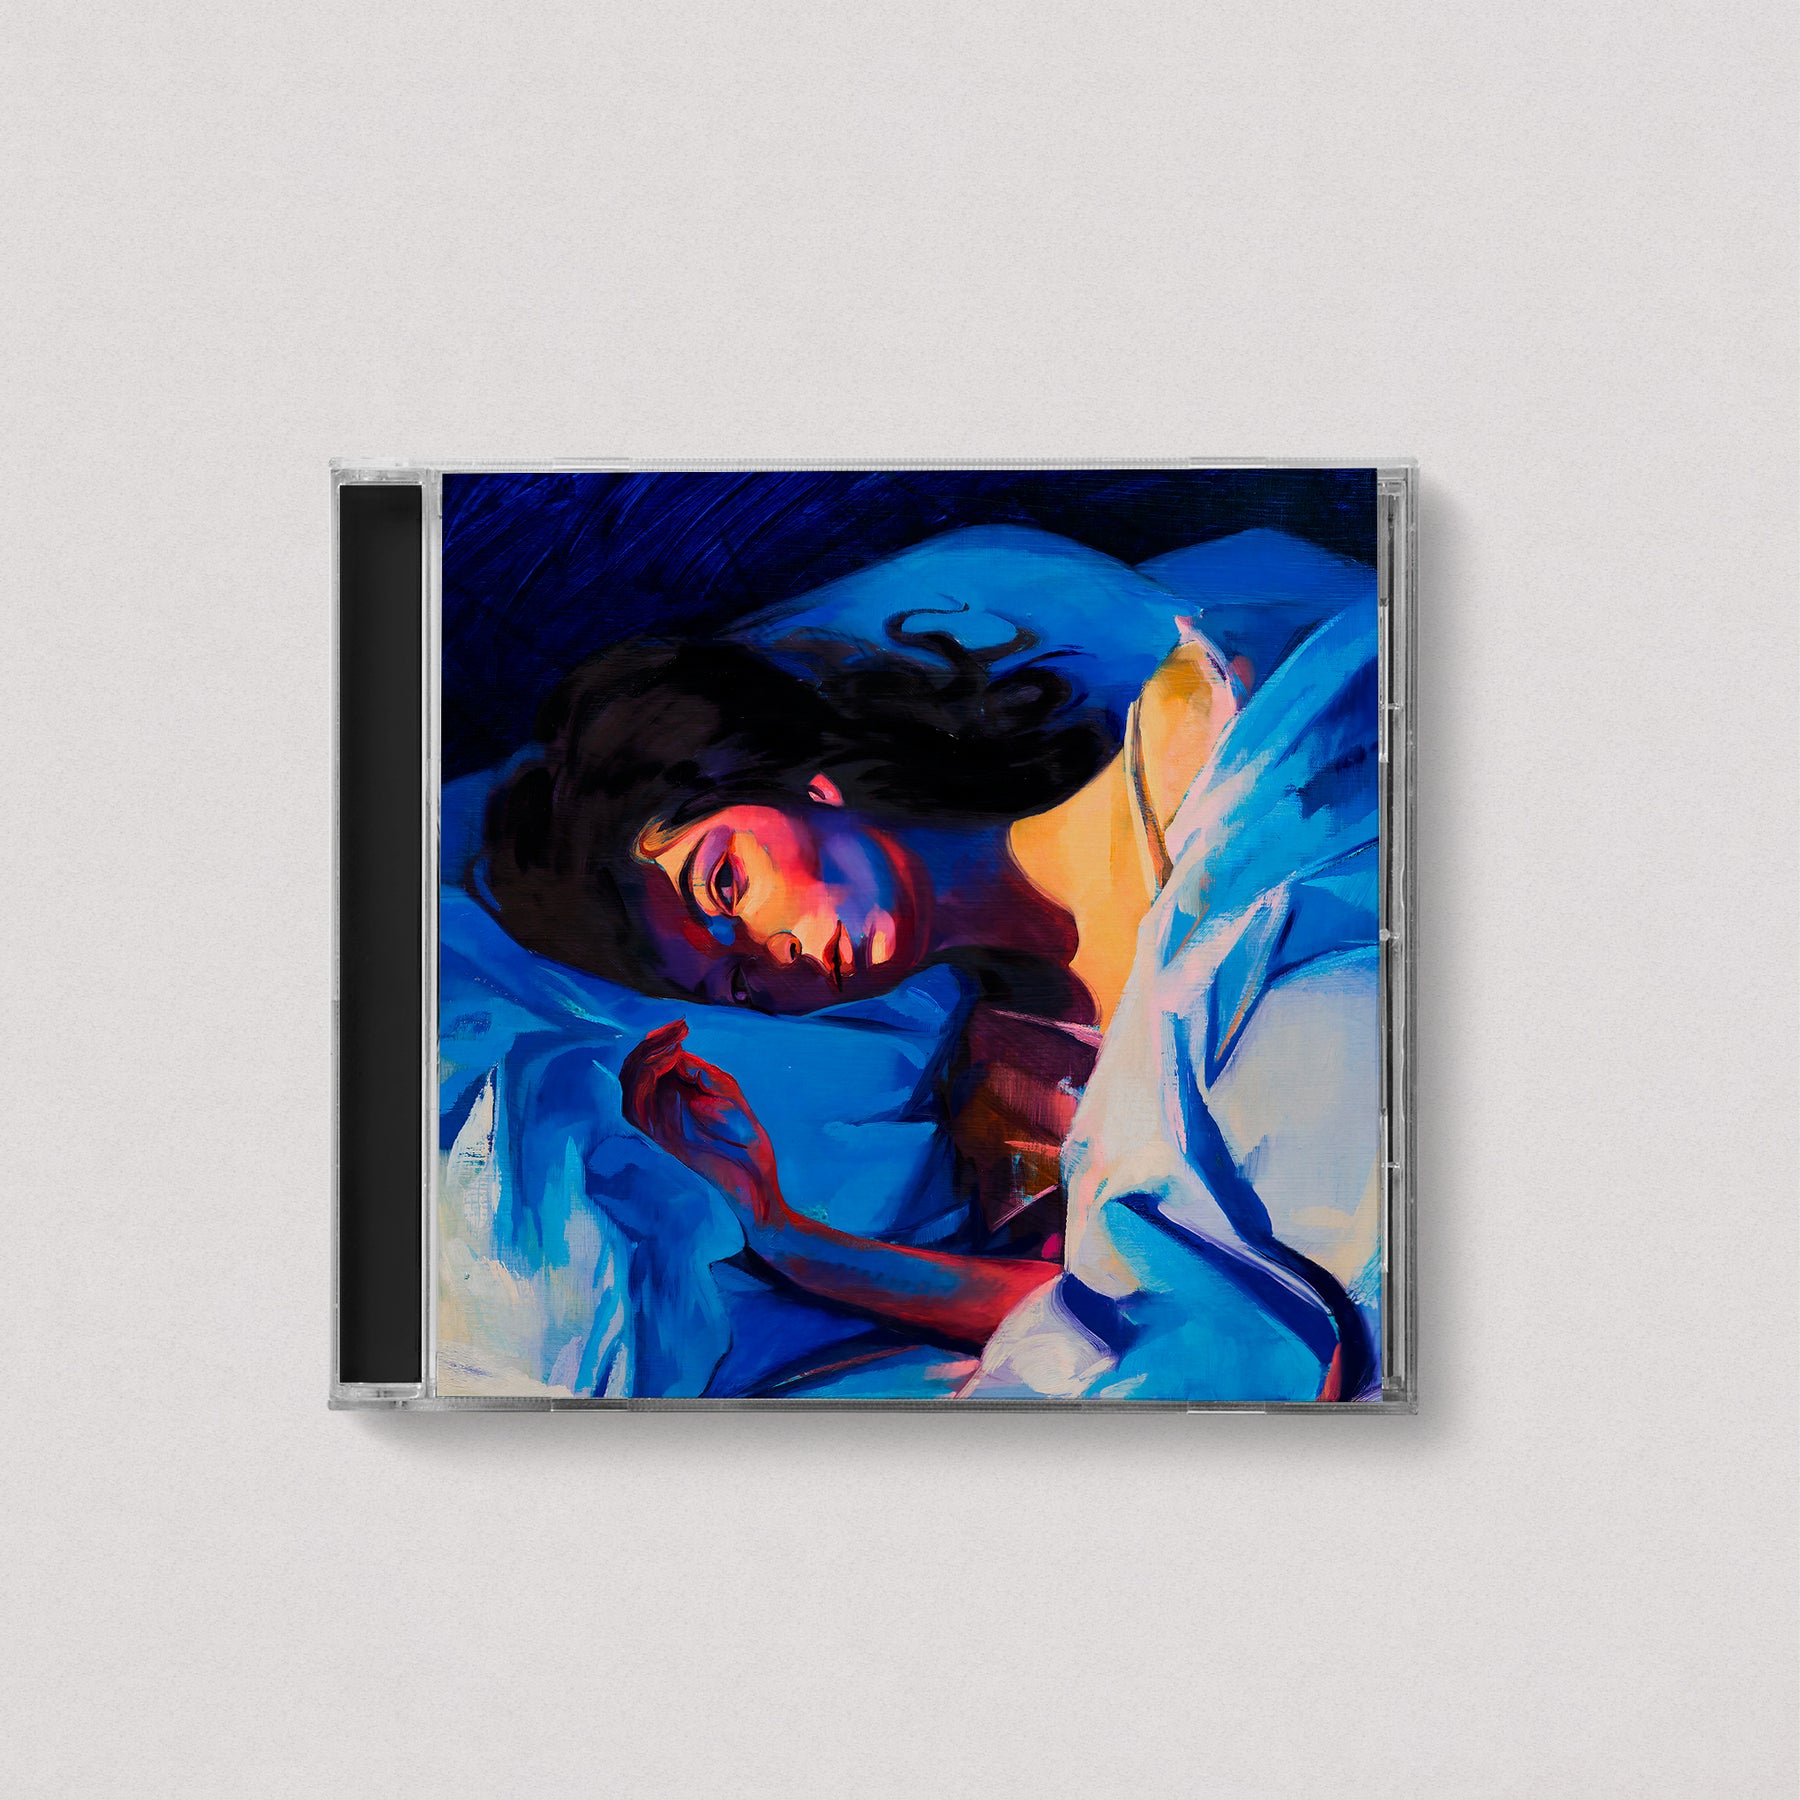 Lorde - Melodrama (Standard, CD)